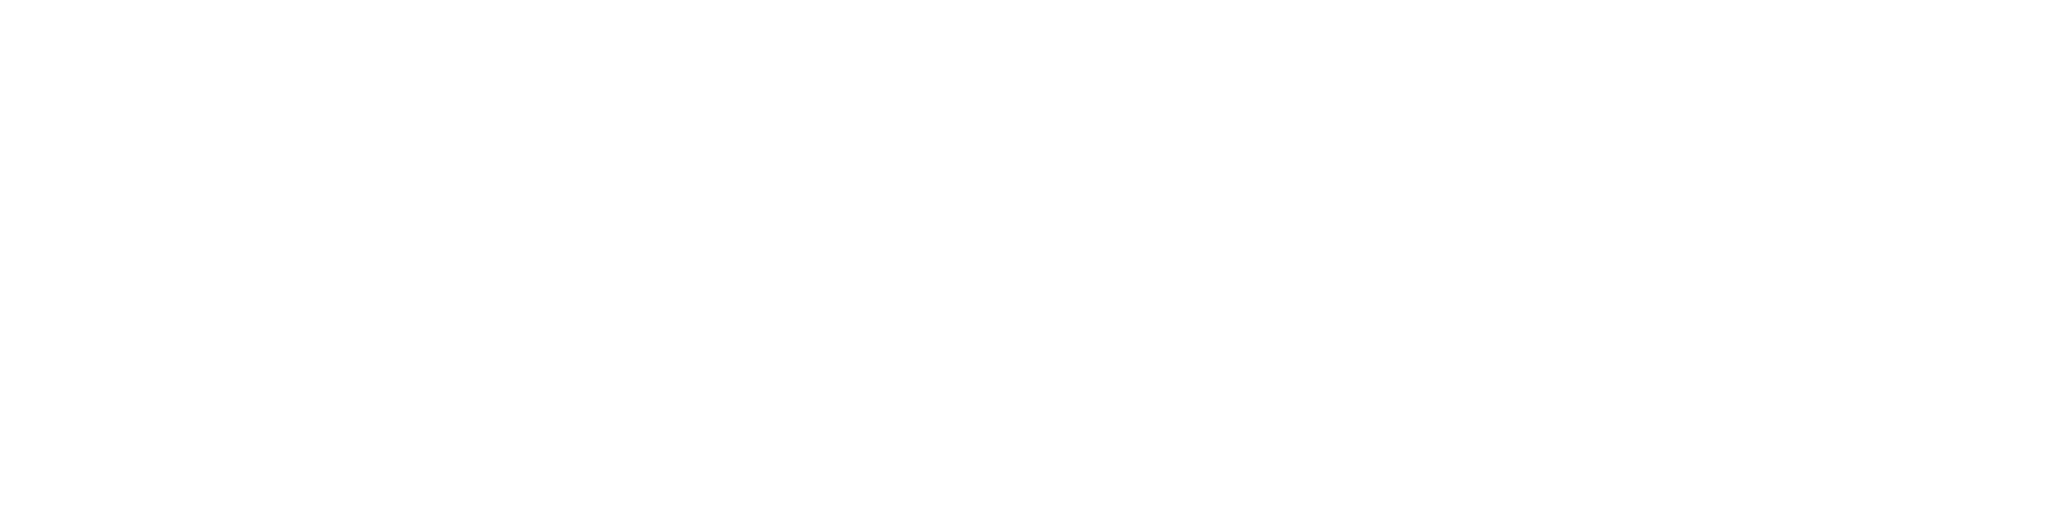 AstraZeneca Logo.